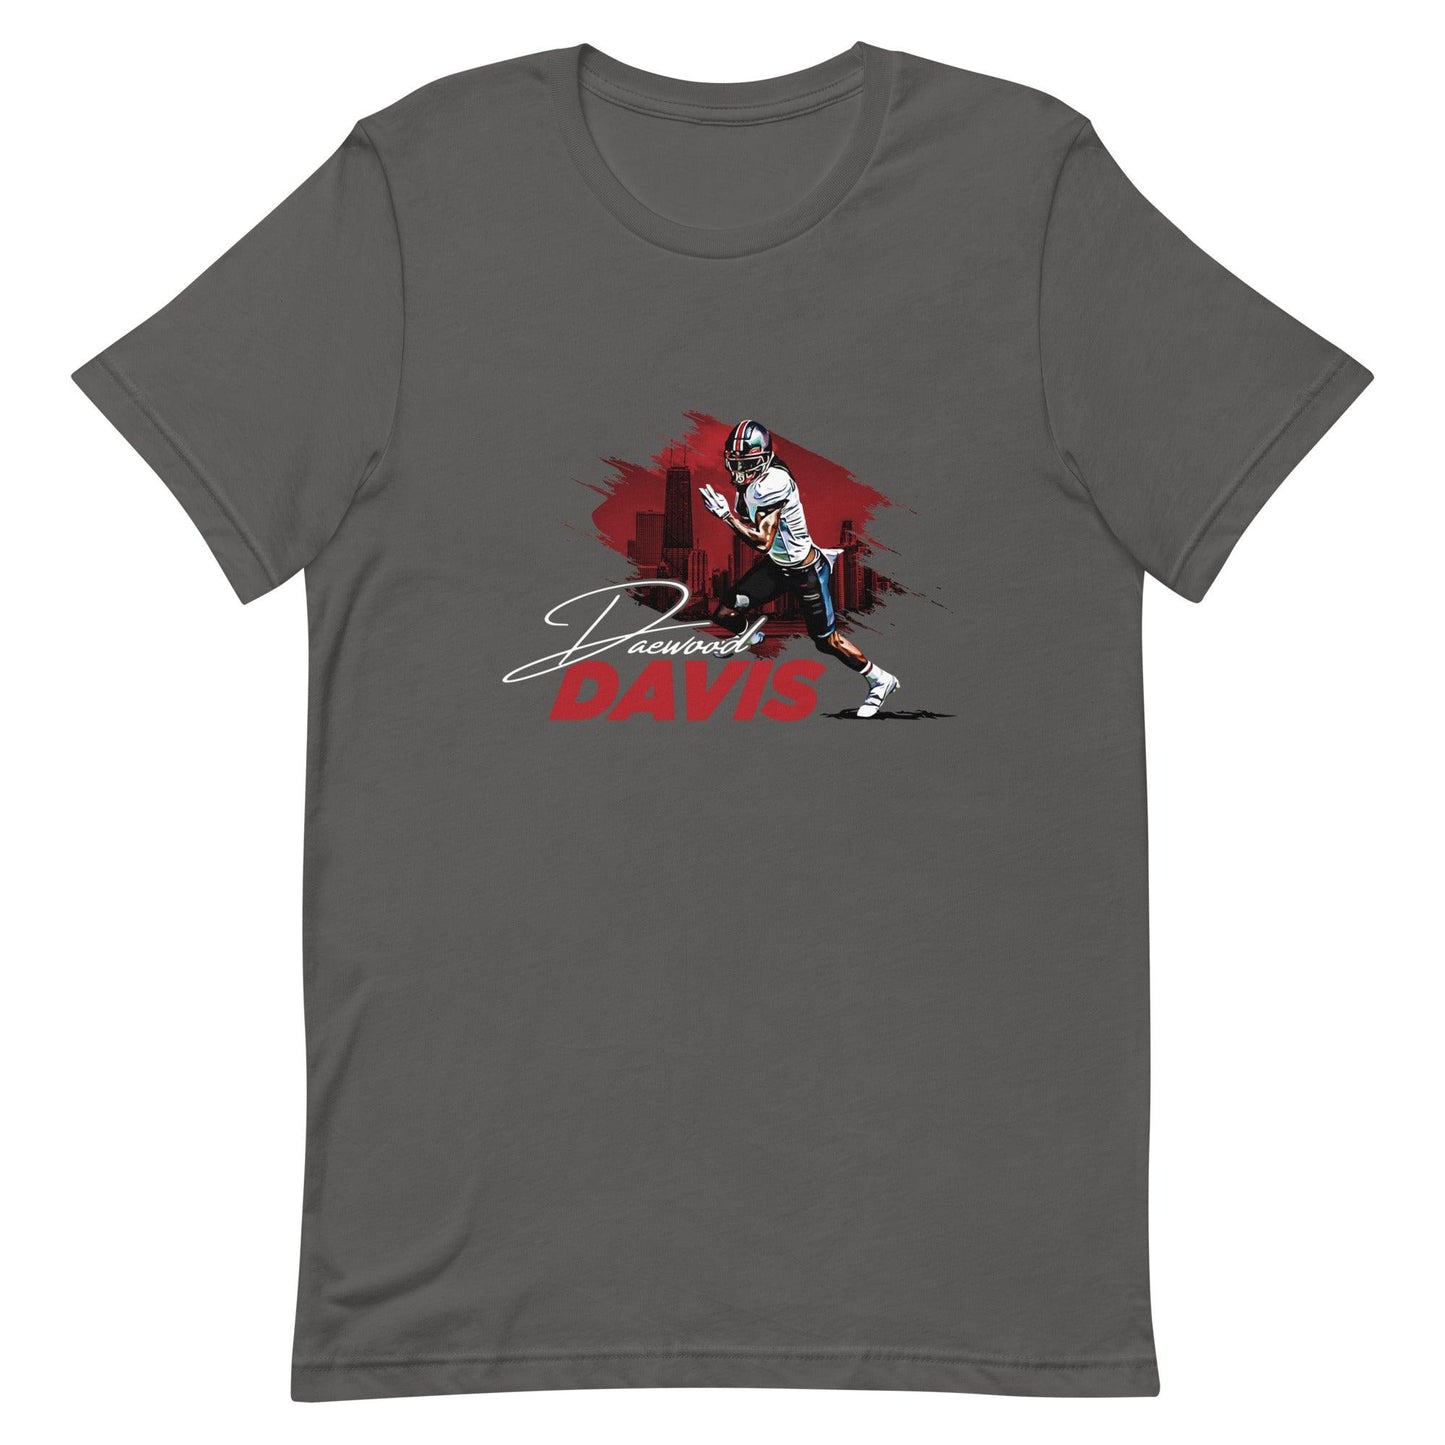 Daewood Davis "Flash" t-shirt - Fan Arch